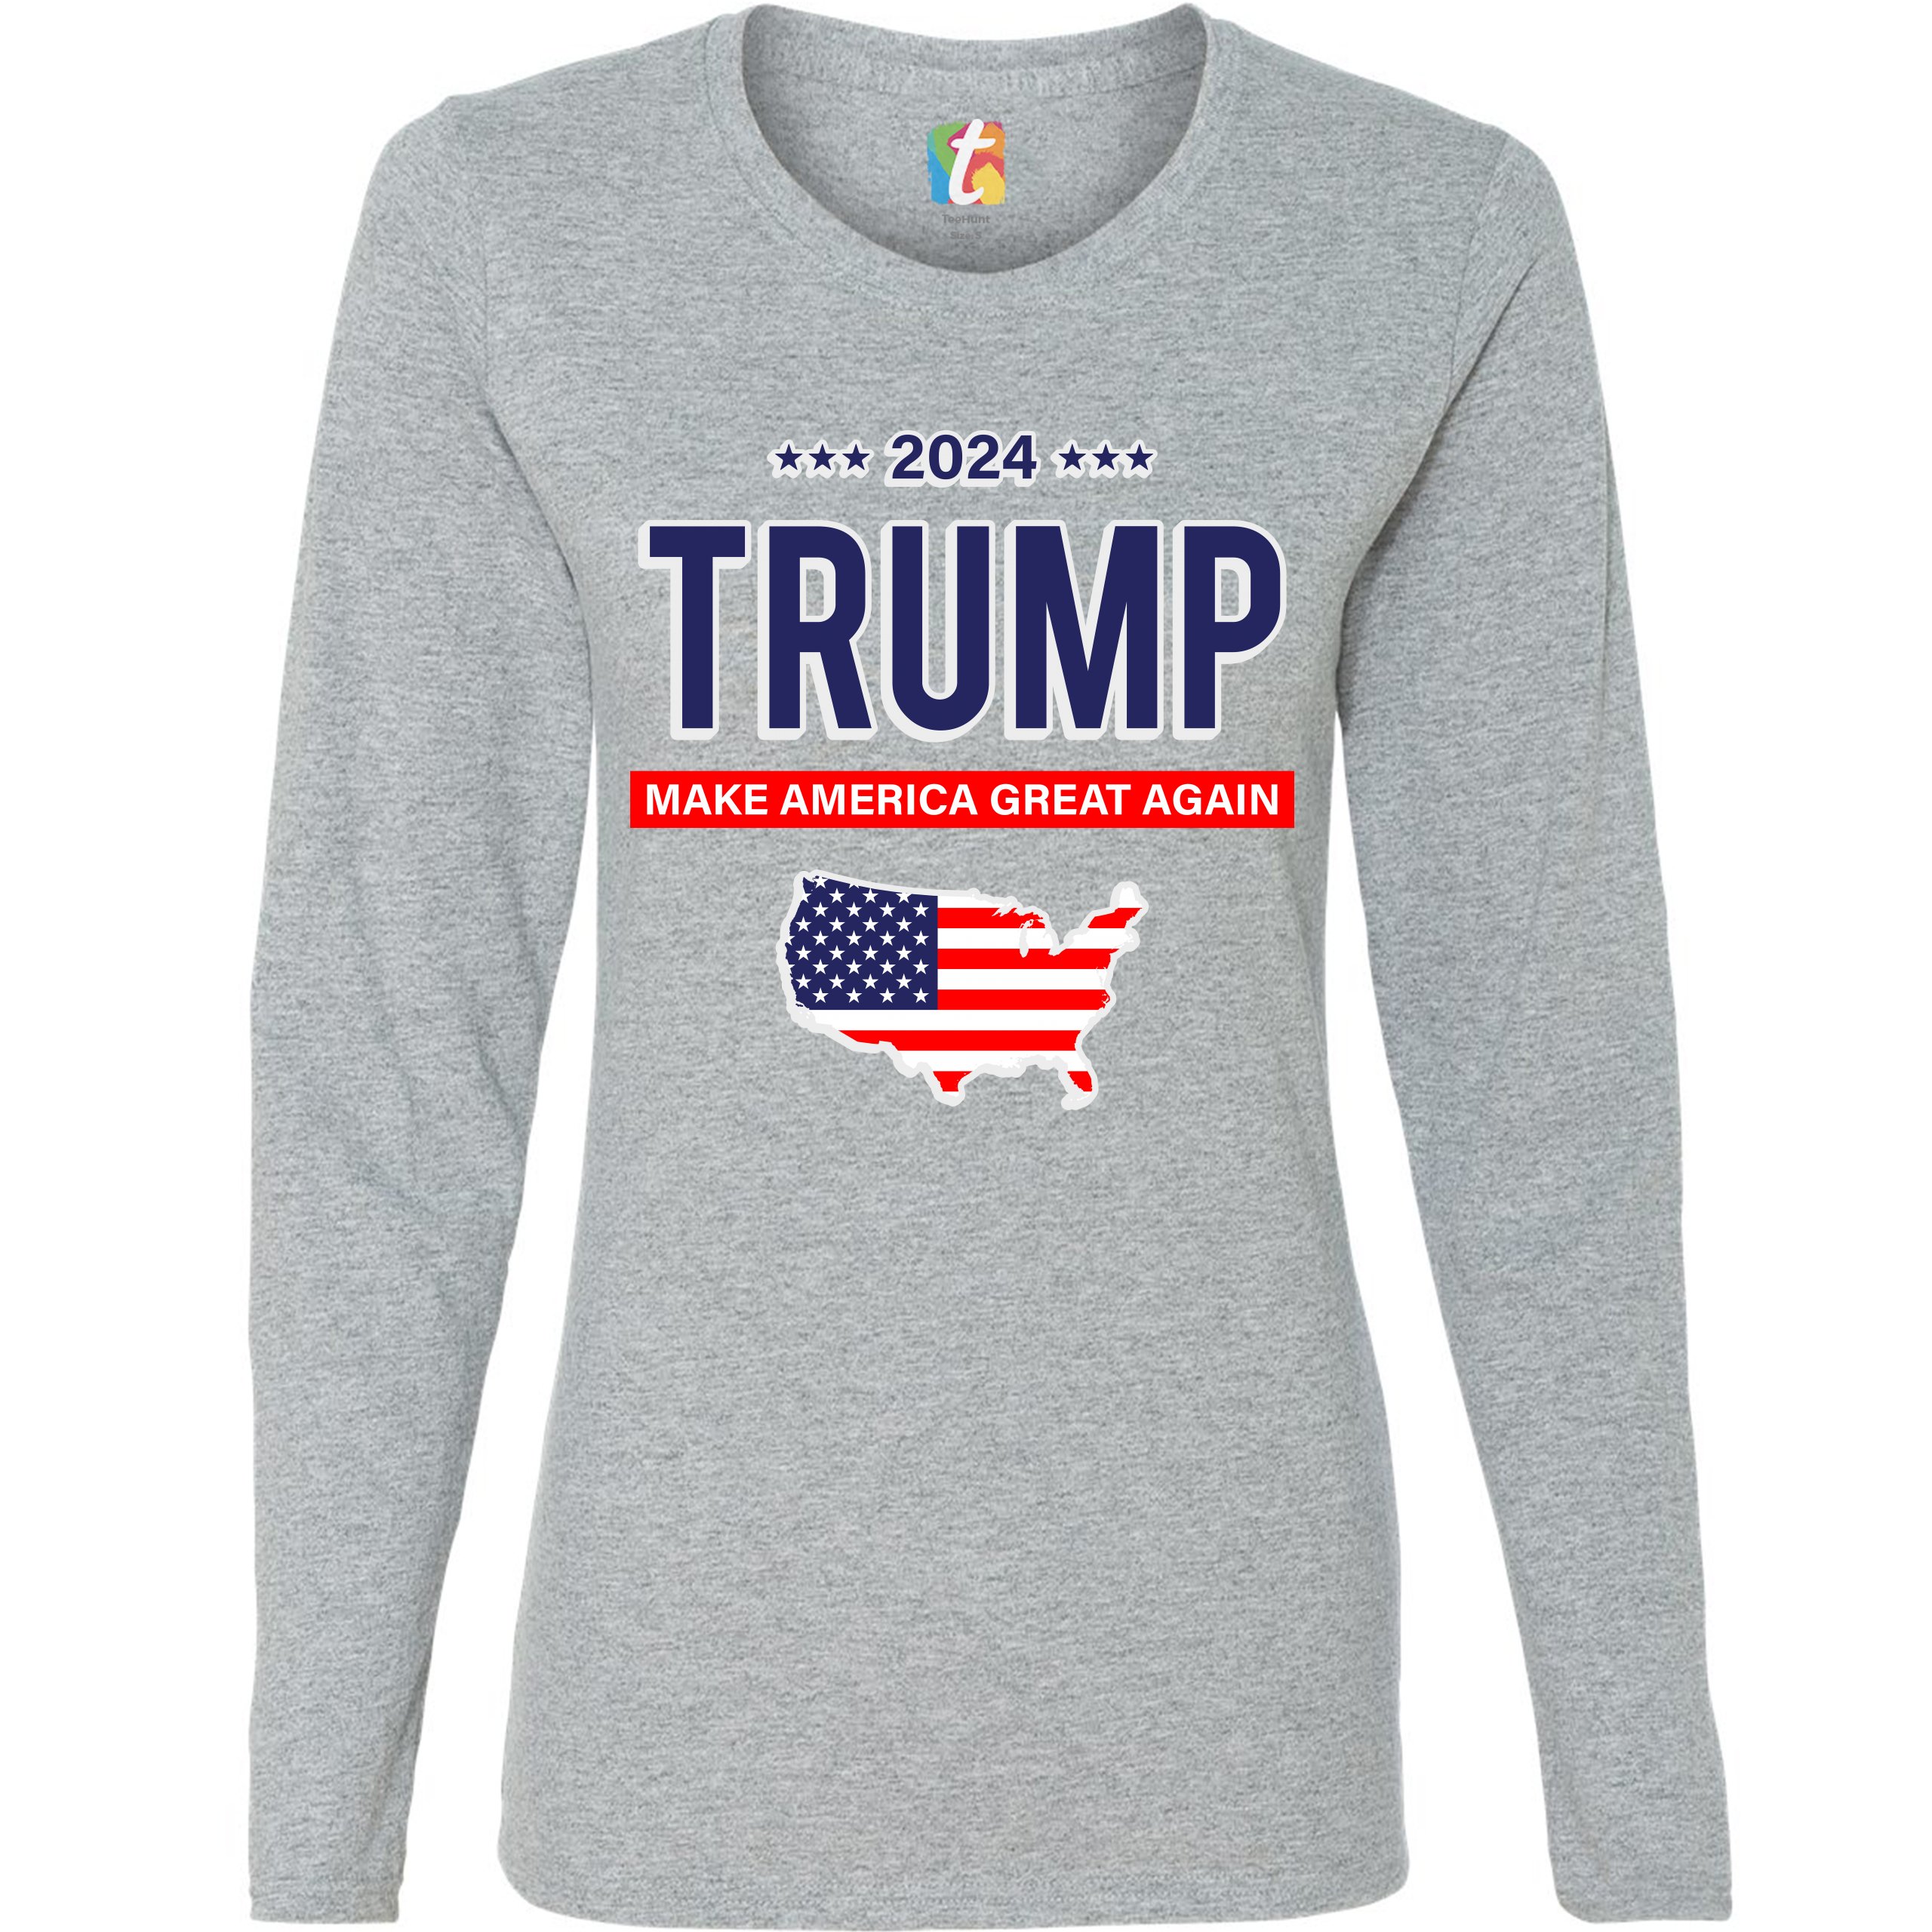 2024 Trump Women's Long Sleeve Tshirt Make America Great Again USA